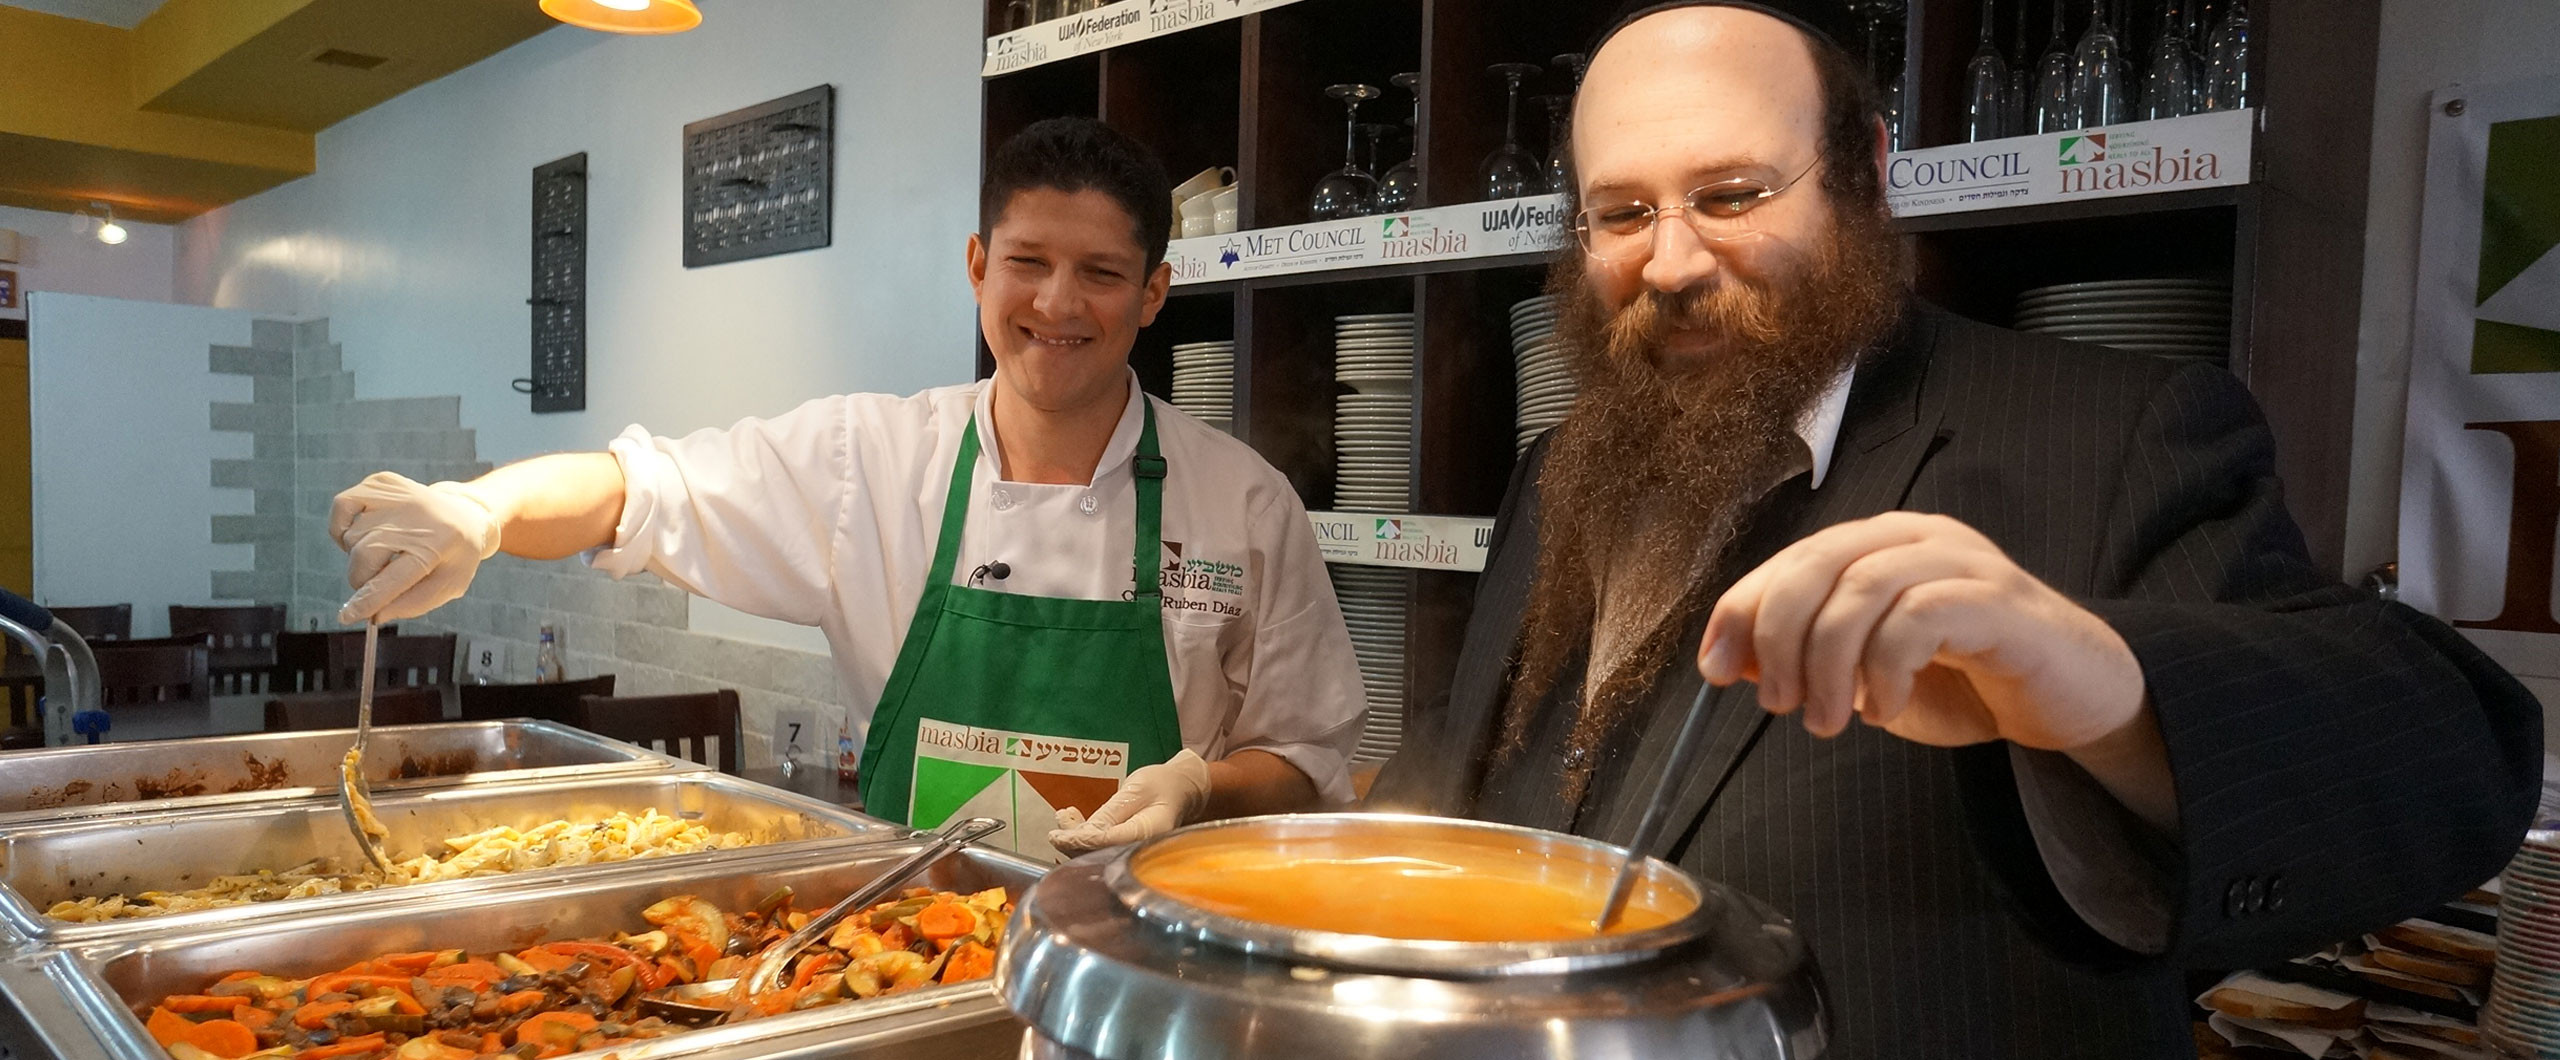 Thanksgiving Soup Kitchen Nyc
 Volunteer Soup Kitchen New York Thanksgiving – Wow Blog